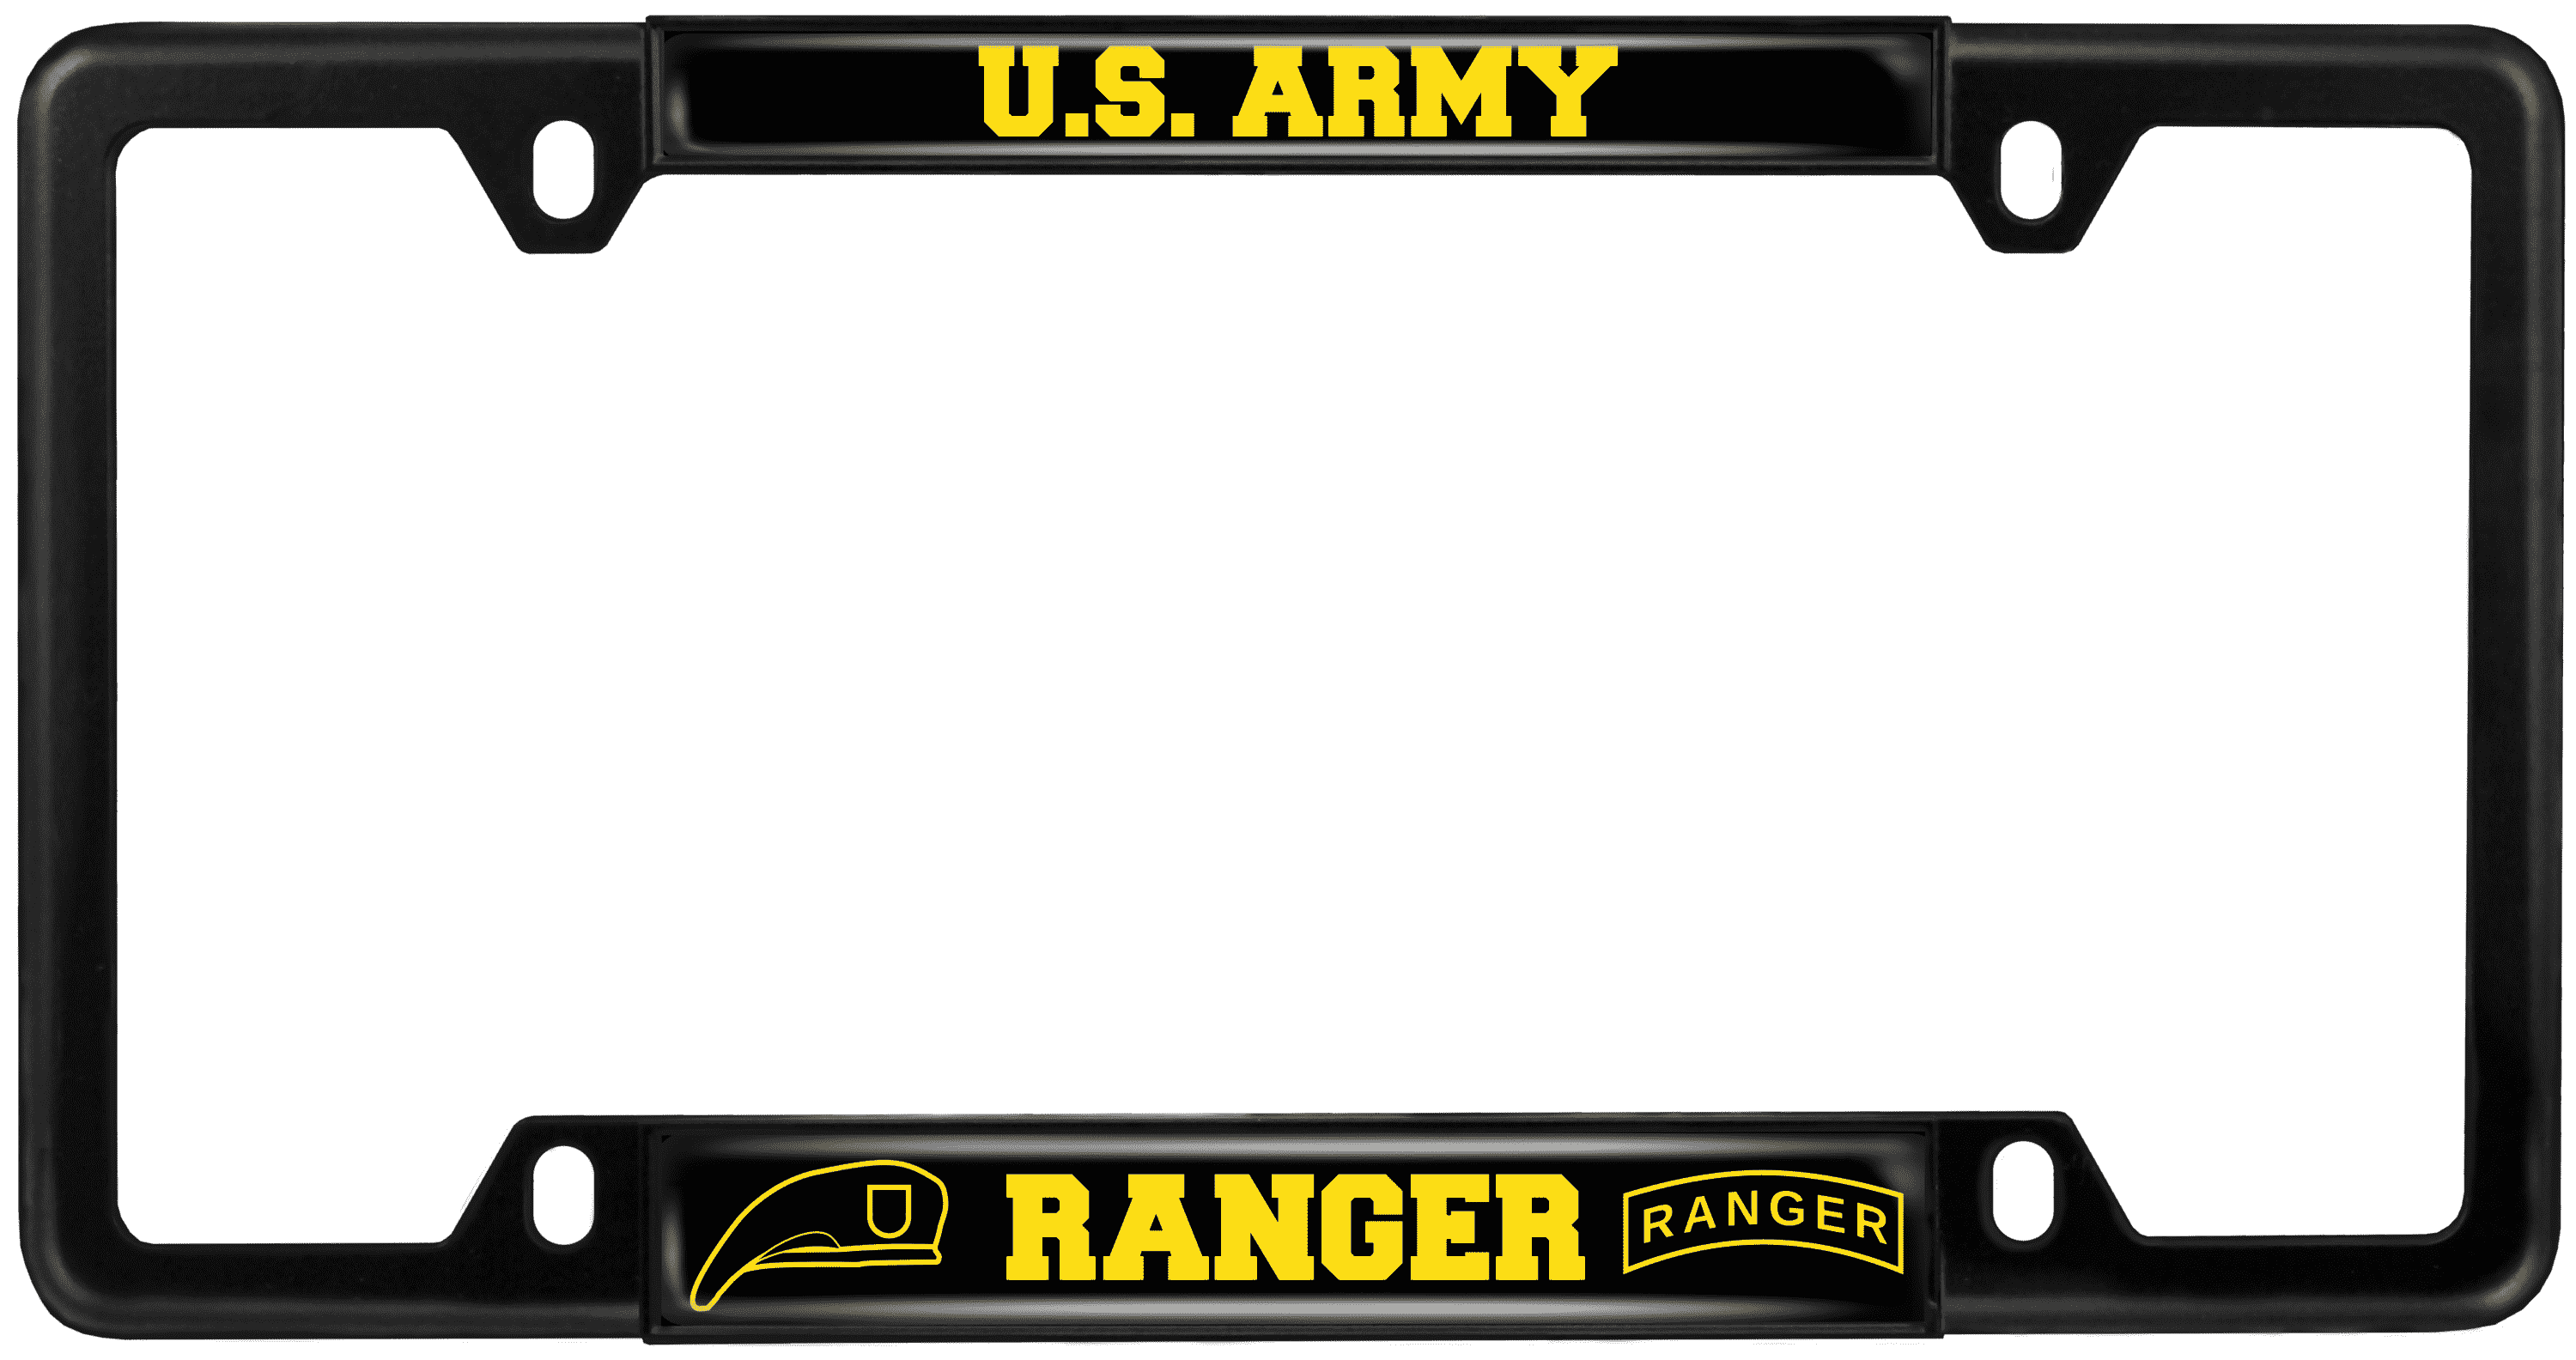 U.S. Army Ranger - Car Metal License Plate Frame